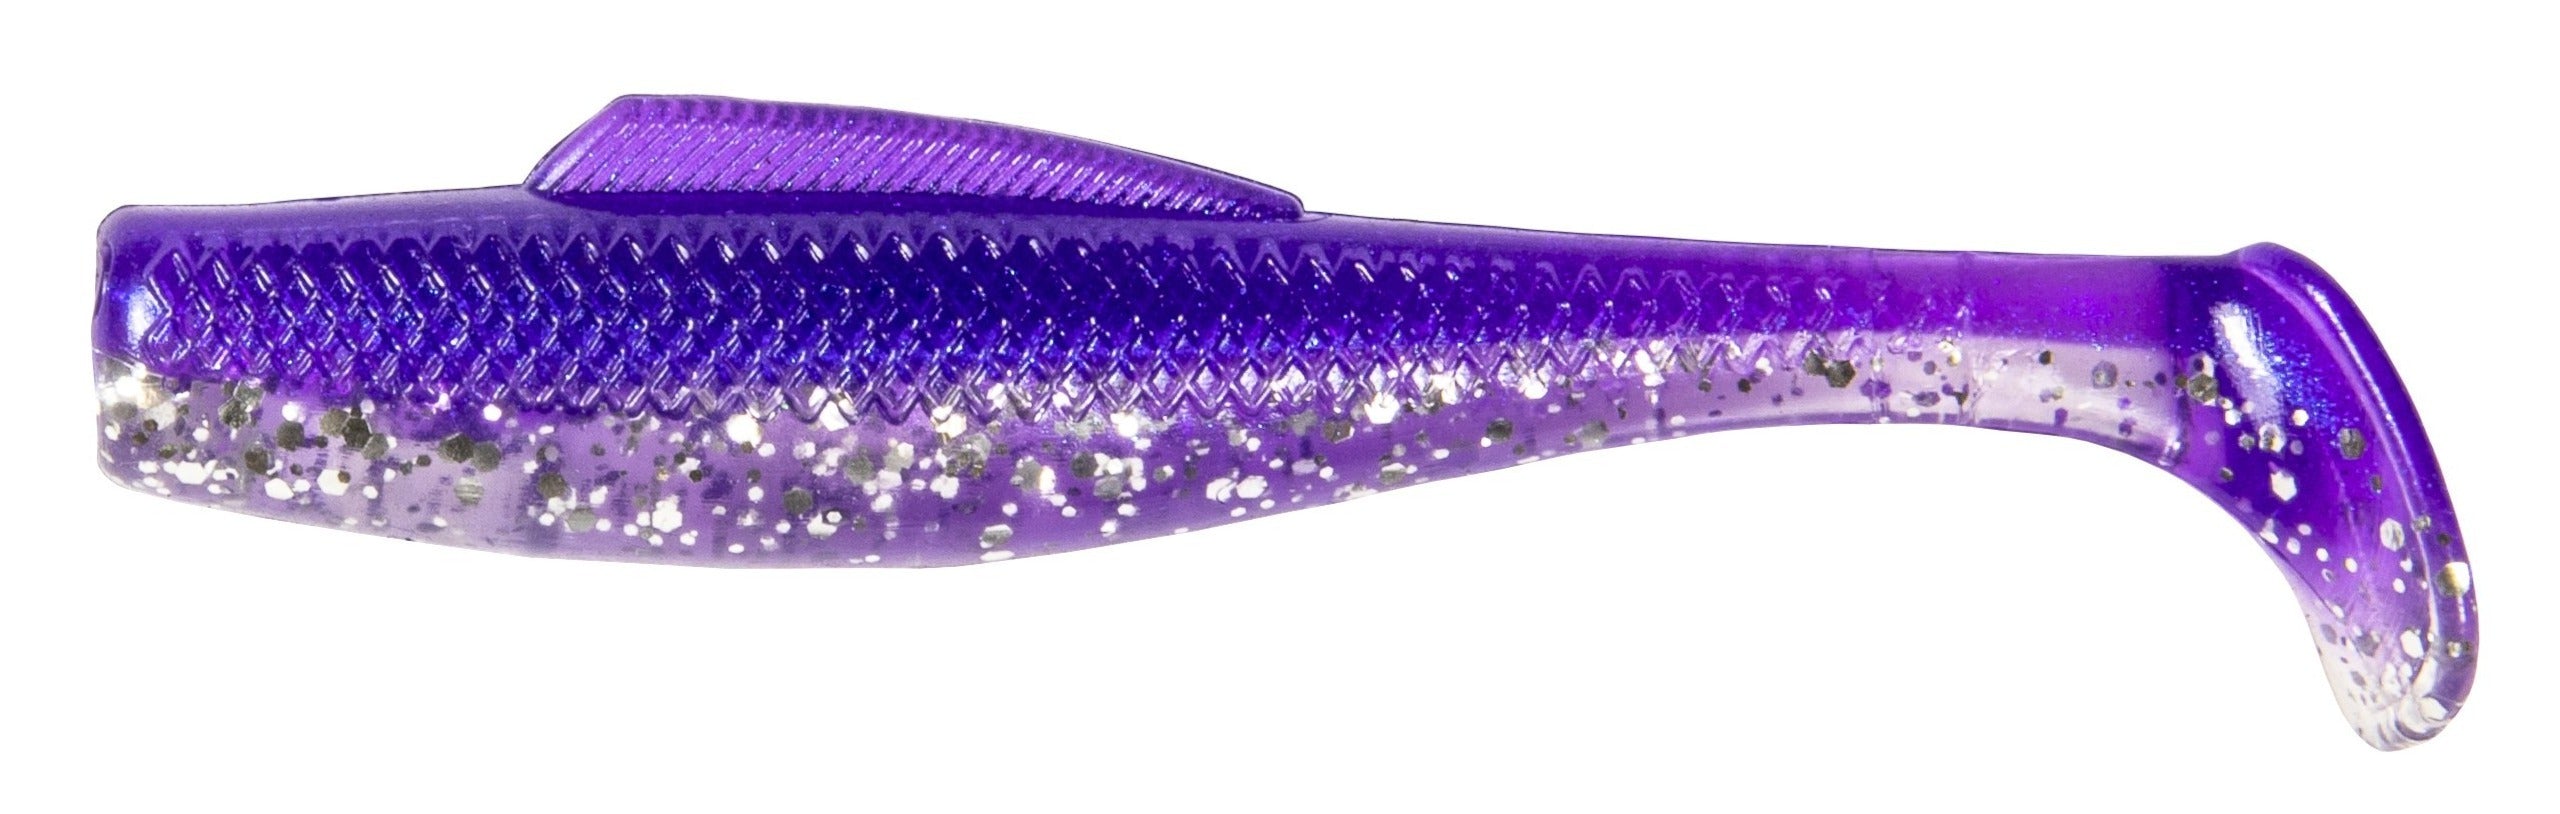 6 Zoom 3.8 Z Swim Soft Plastic Paddle Tail Fishing Baits Electric